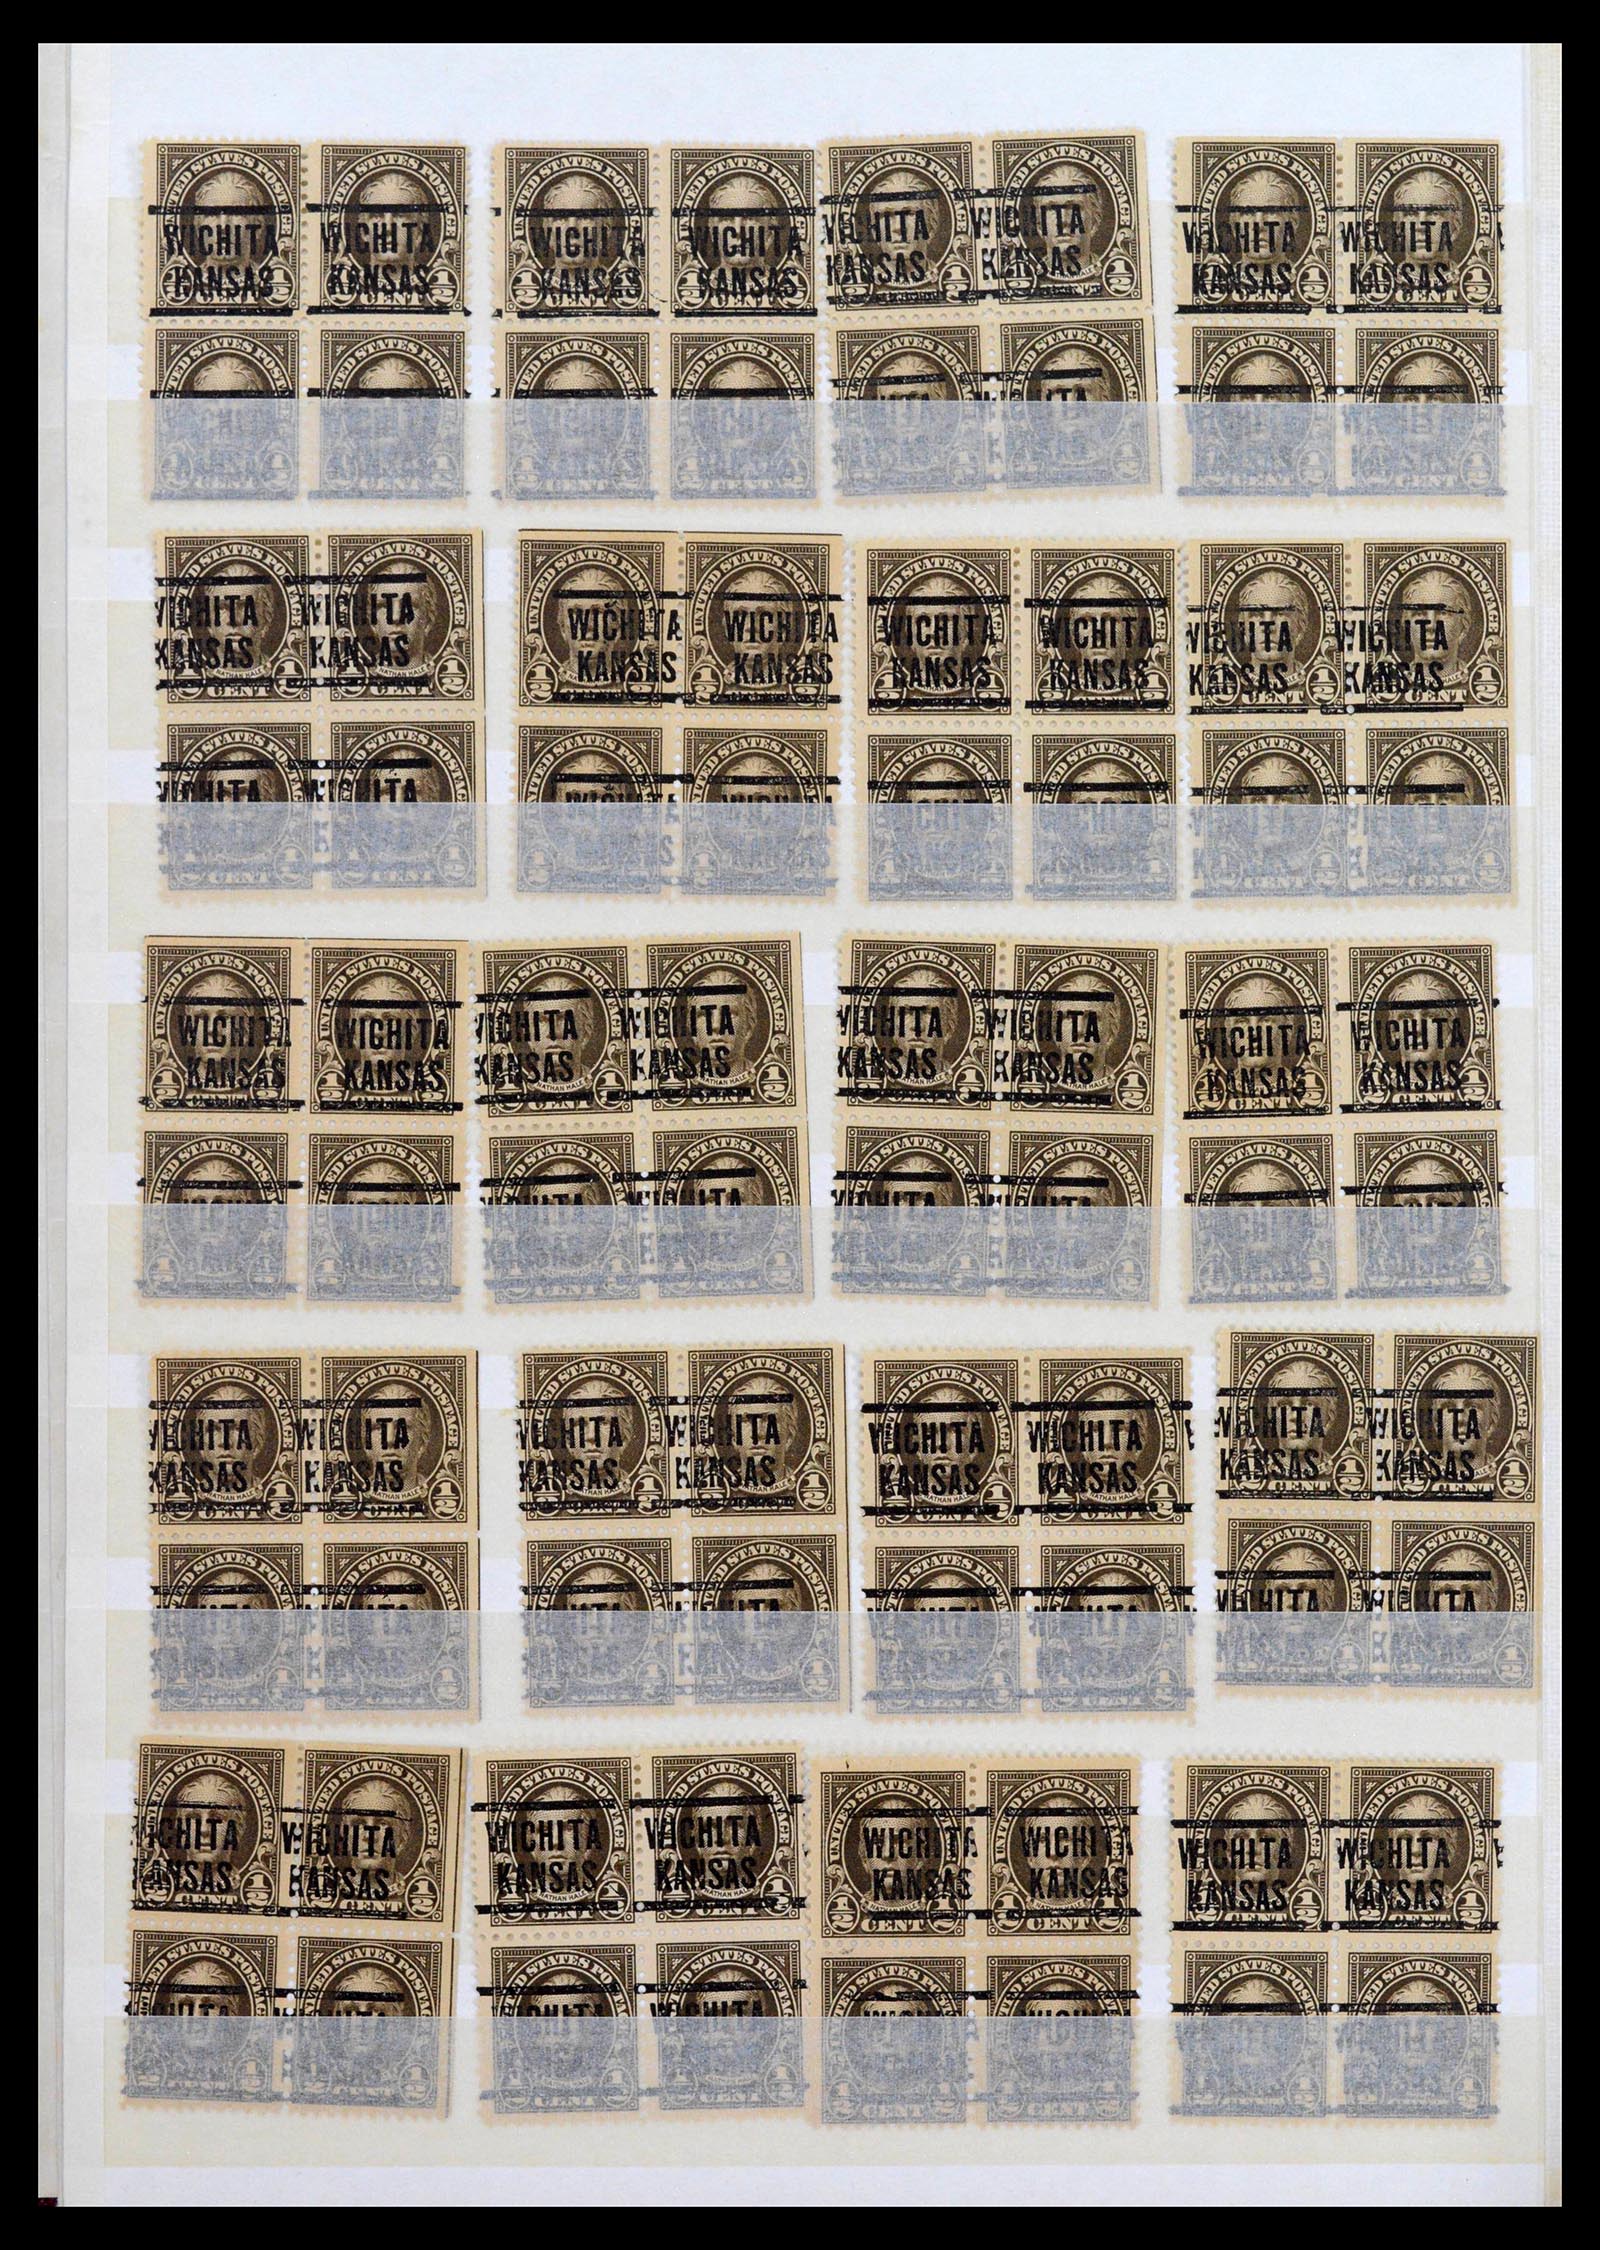 39366 0030 - Stamp collection 39366 USA precancels 1892-1940.